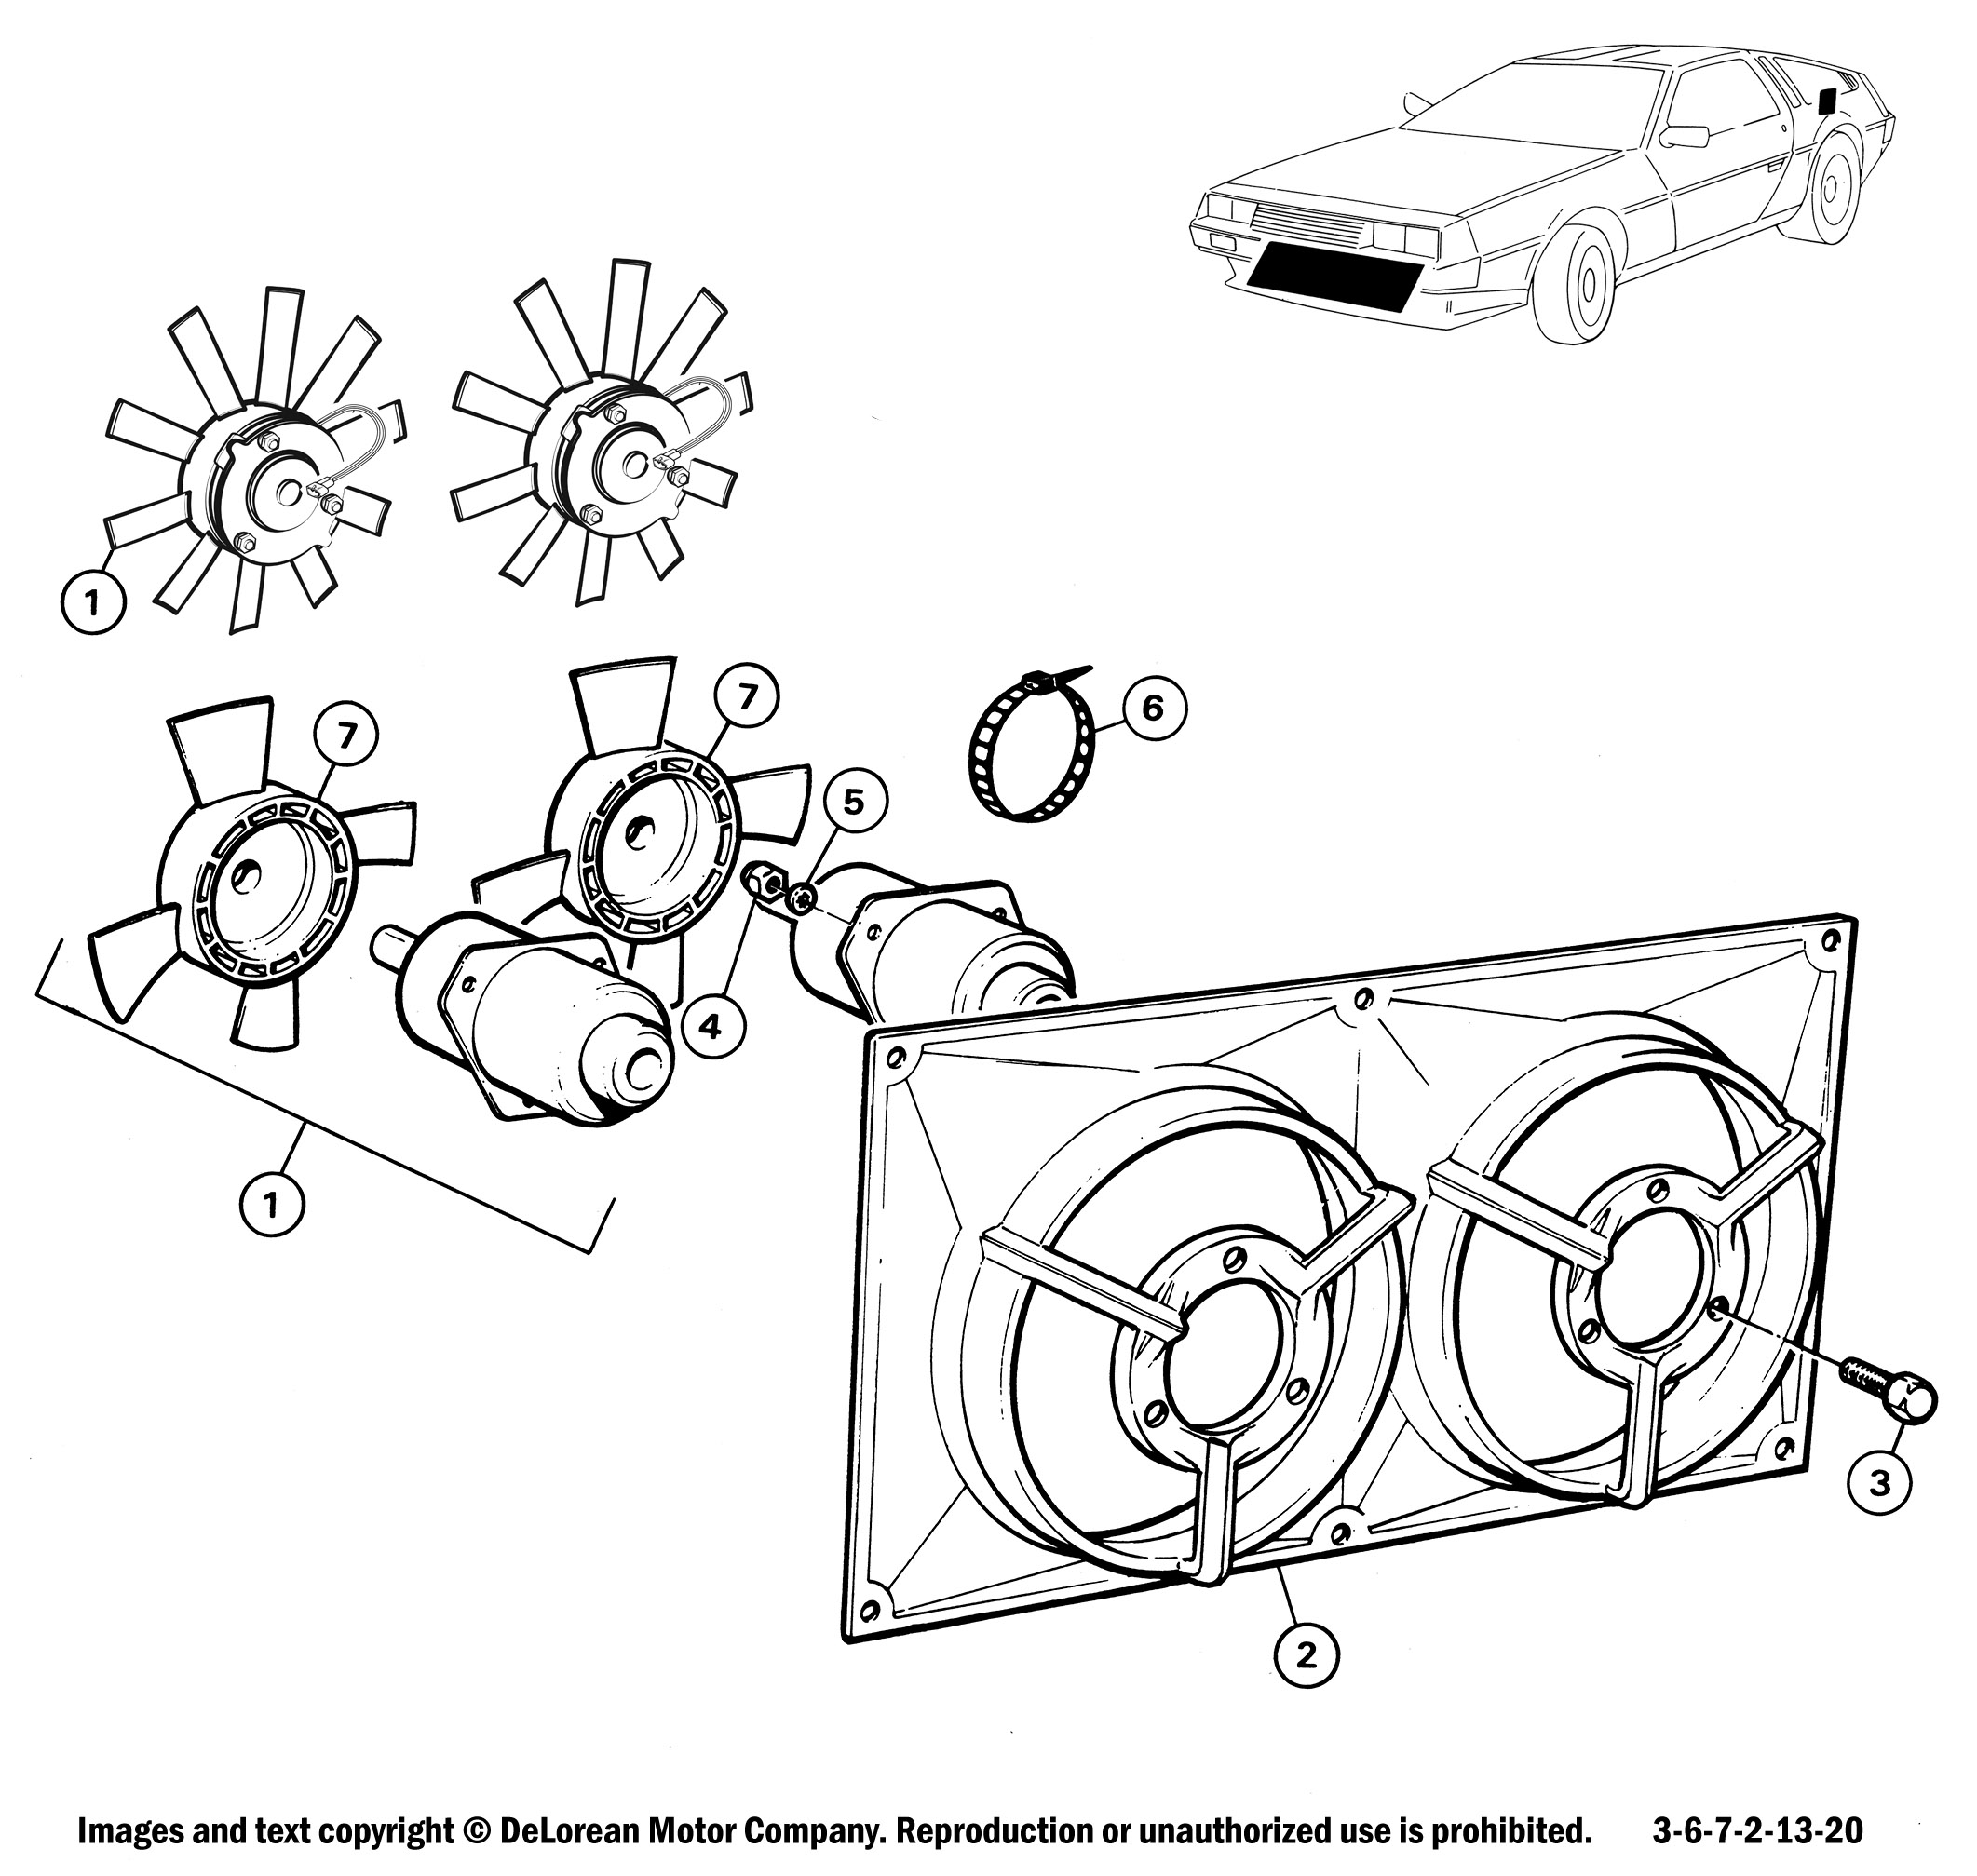 Automotive Cooling Fan Reference Design, Reference Design